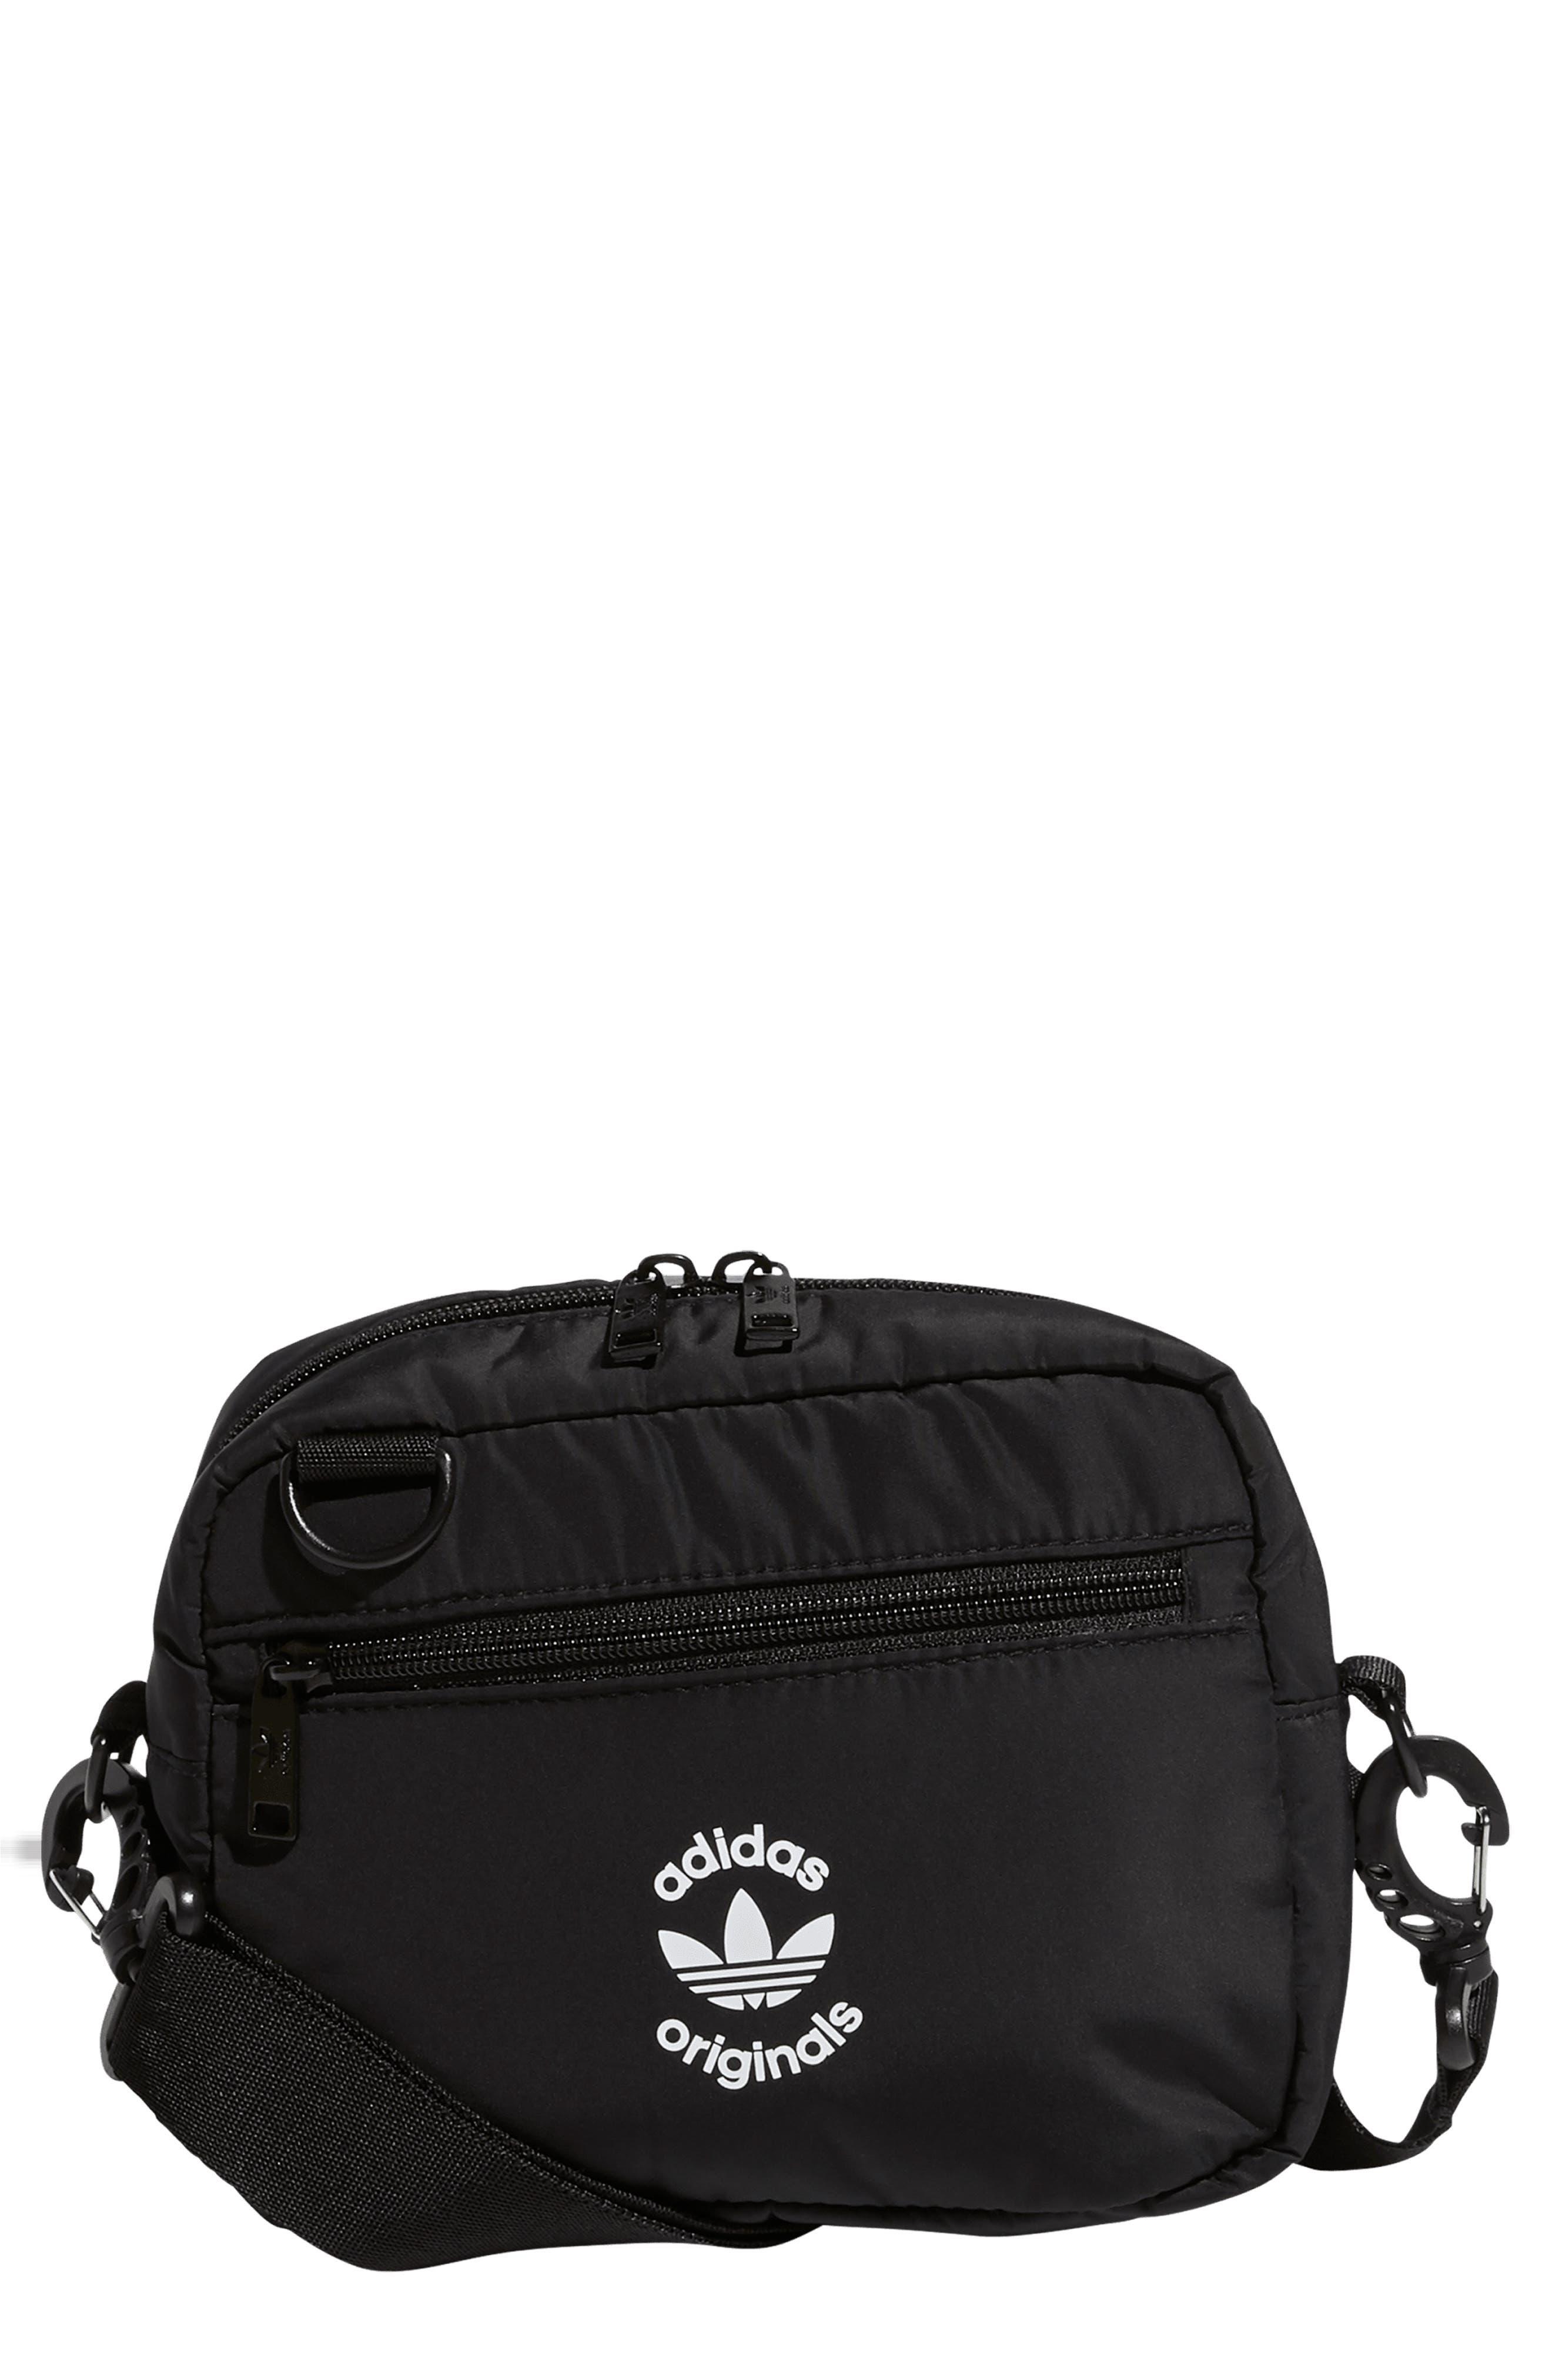 adidas Originals Puffer Clip On Pouch & Crossbody Bag in Black/White  (Black) | Lyst